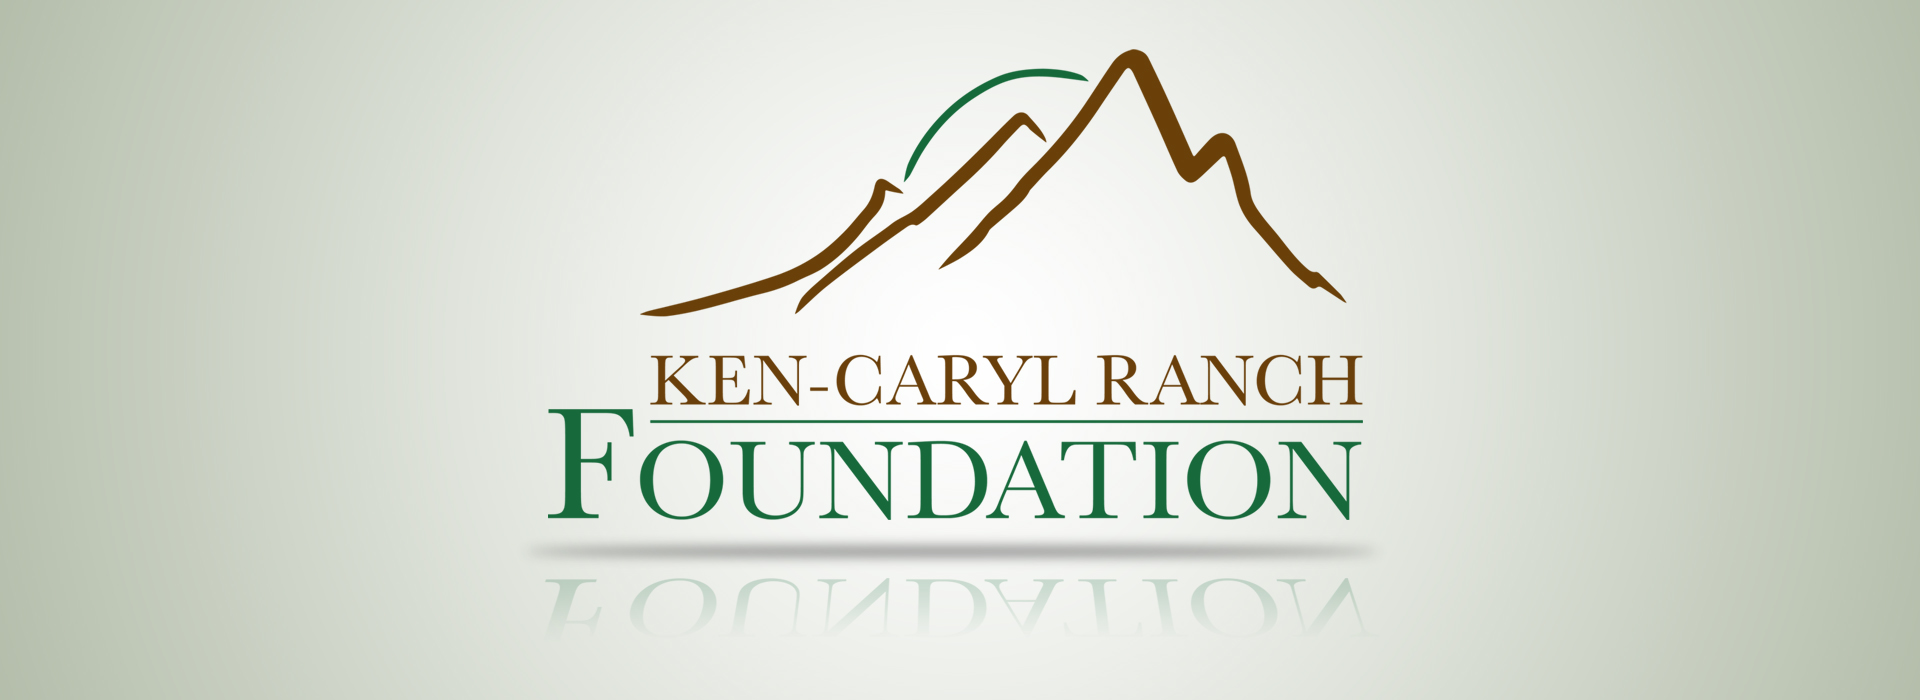 Ken-Caryl Ranch Foundation Large Logo